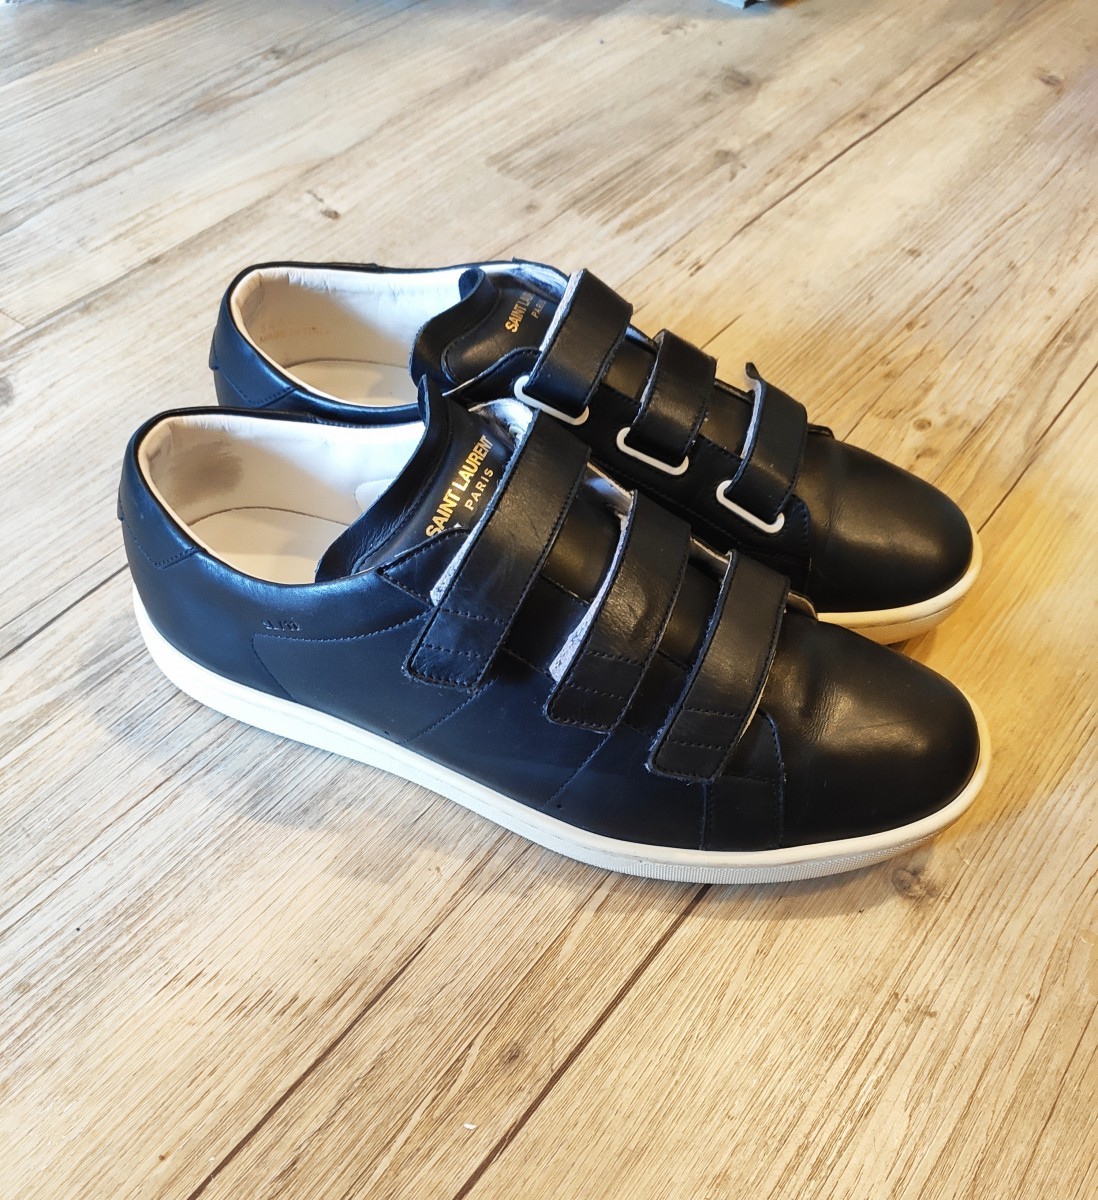 Velcro sneakers.Like Celine or Raf Simons - 6